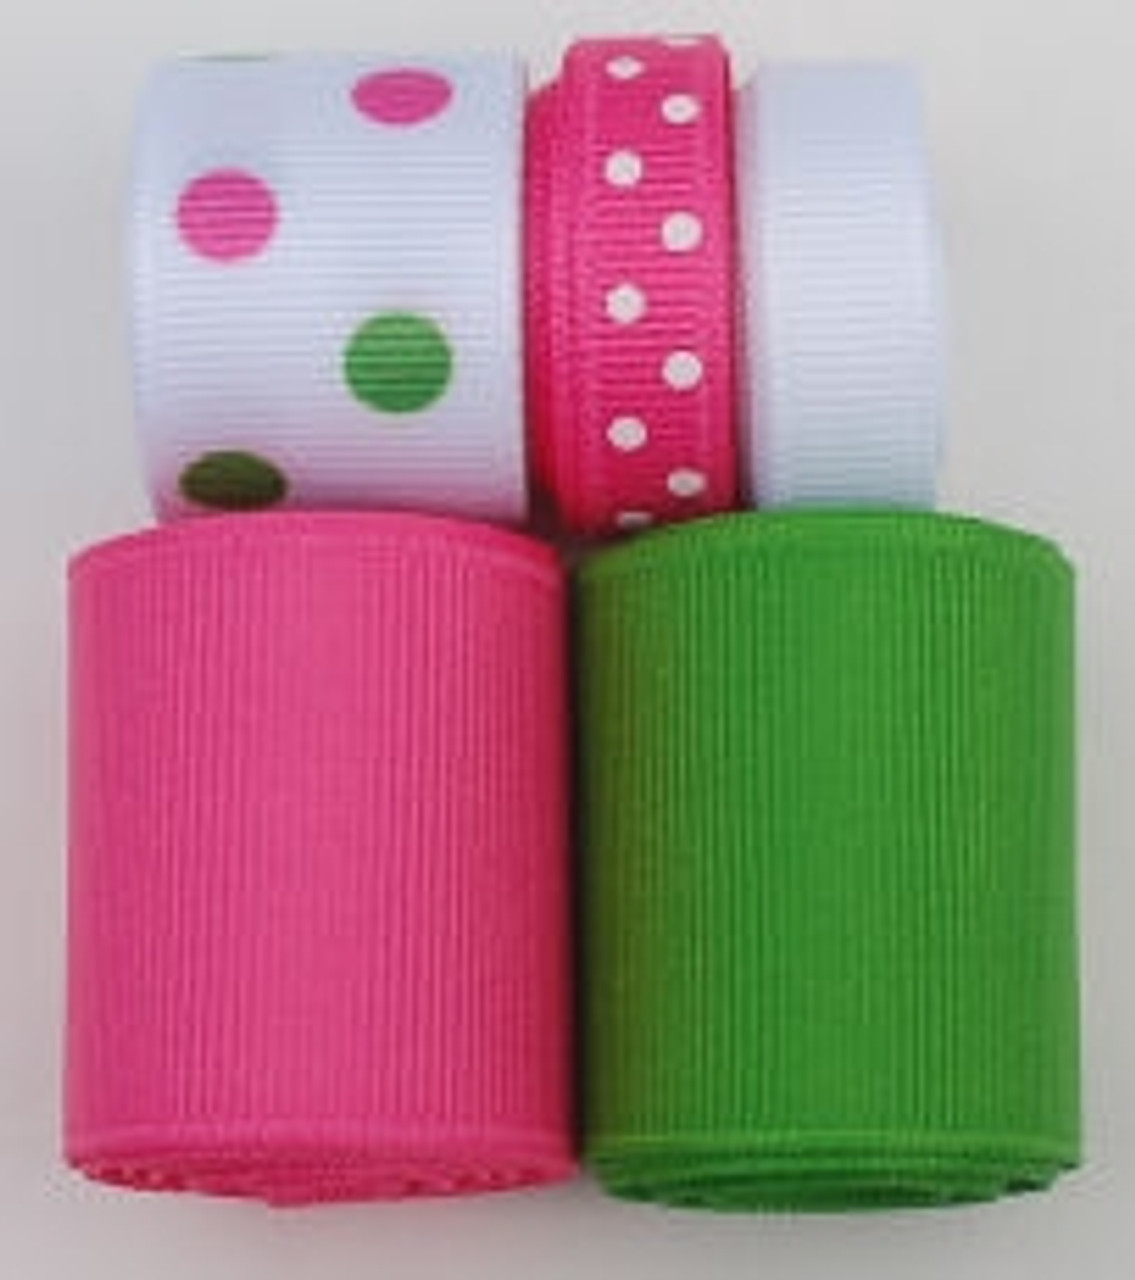 Pink Bows & Dots Grosgrain Ribbon - 1 1/2